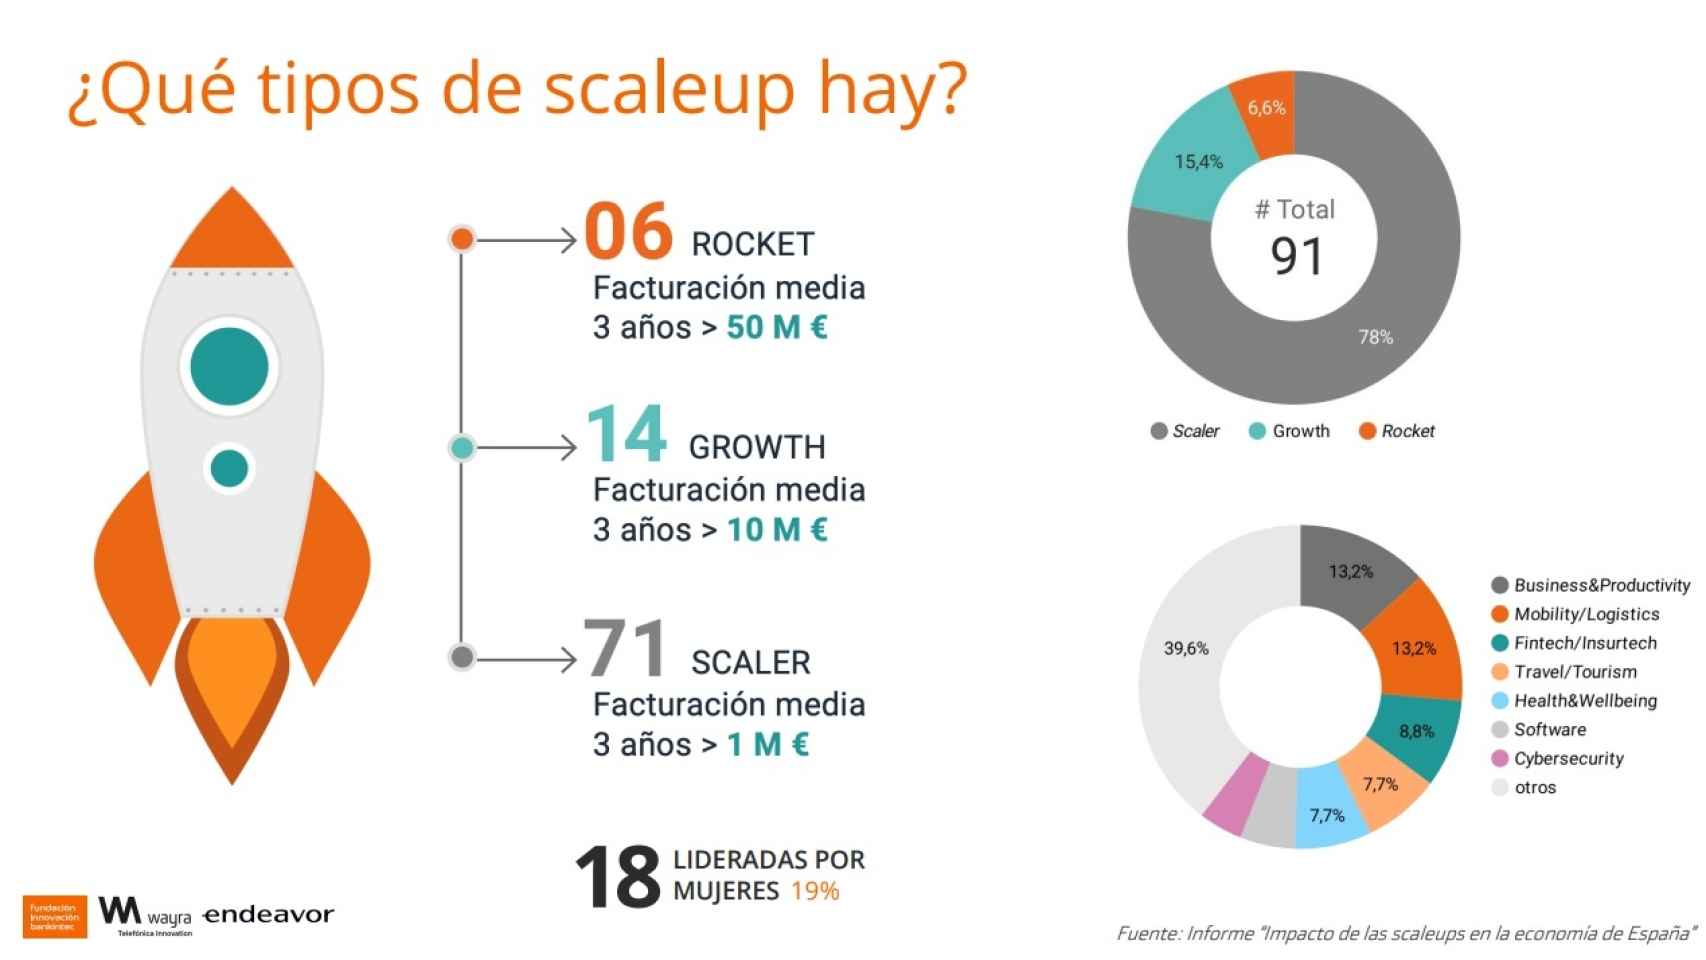 Tipologías de 'scaleups' según el informe de Scaleup Spain Network.